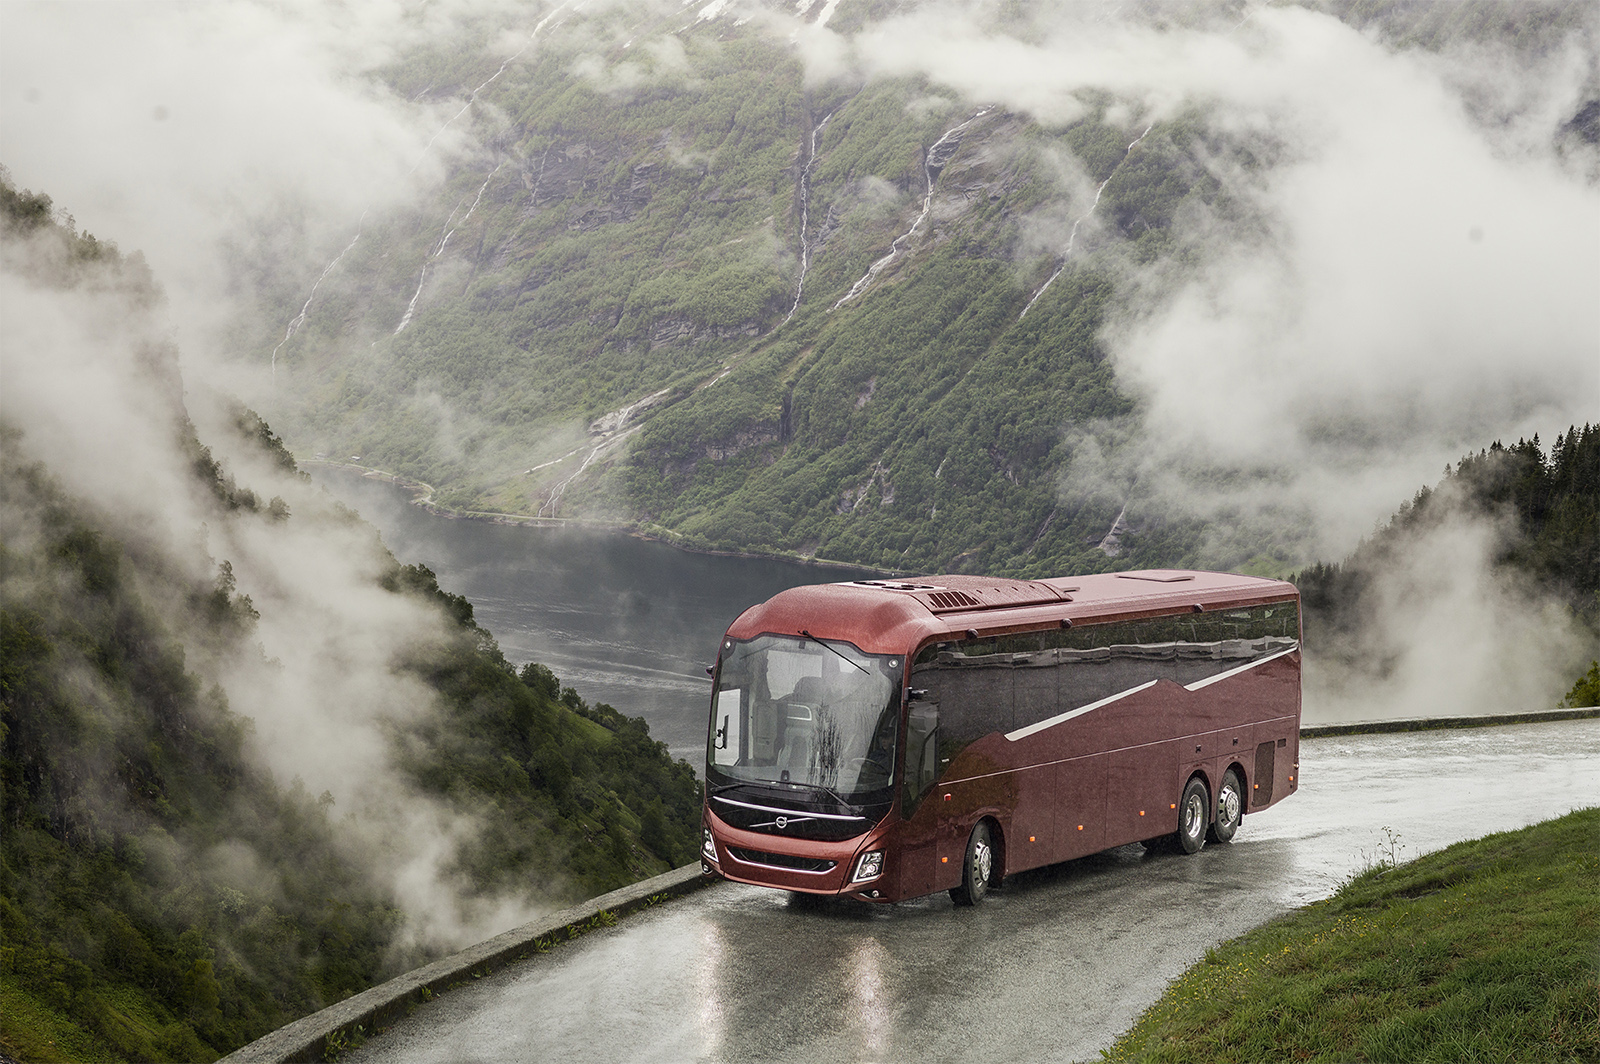 Globális turistabusz-platformot mutatott be a Volvo